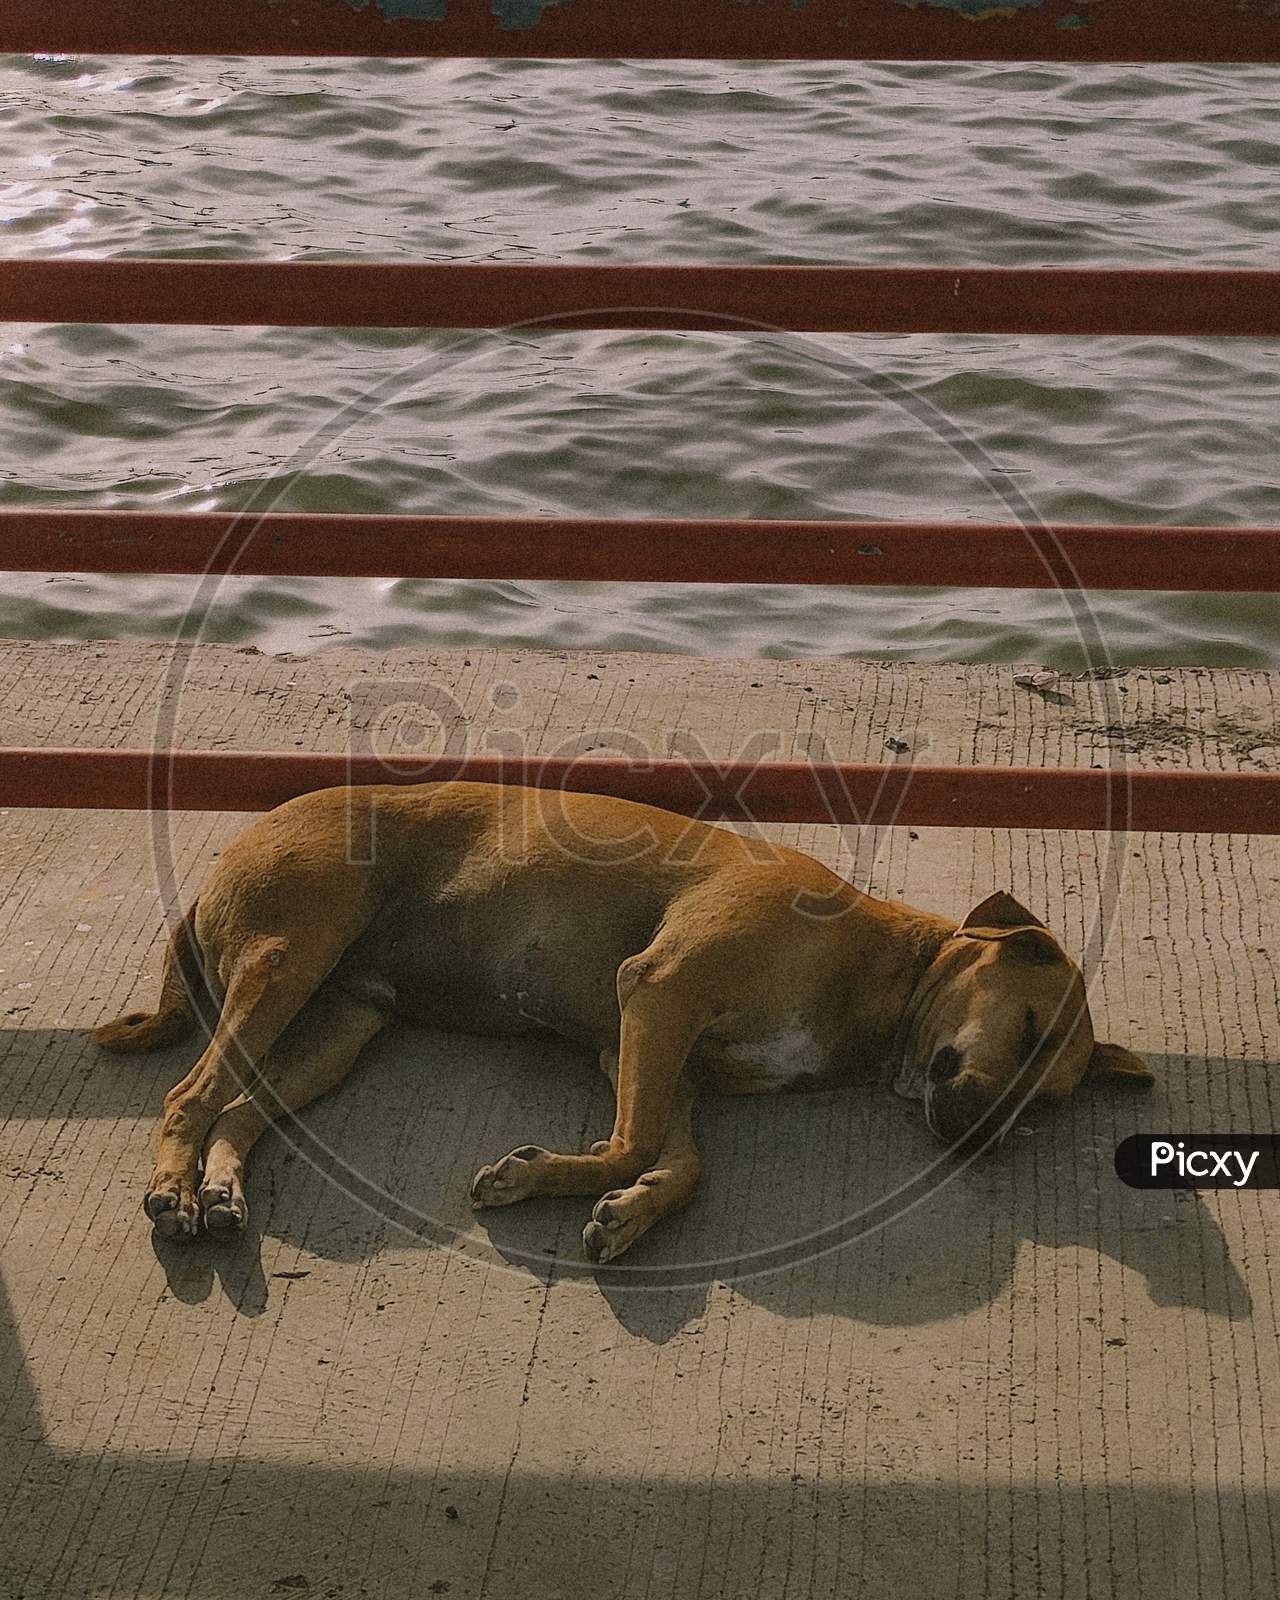 Dog sleeping peacefully by the sea.